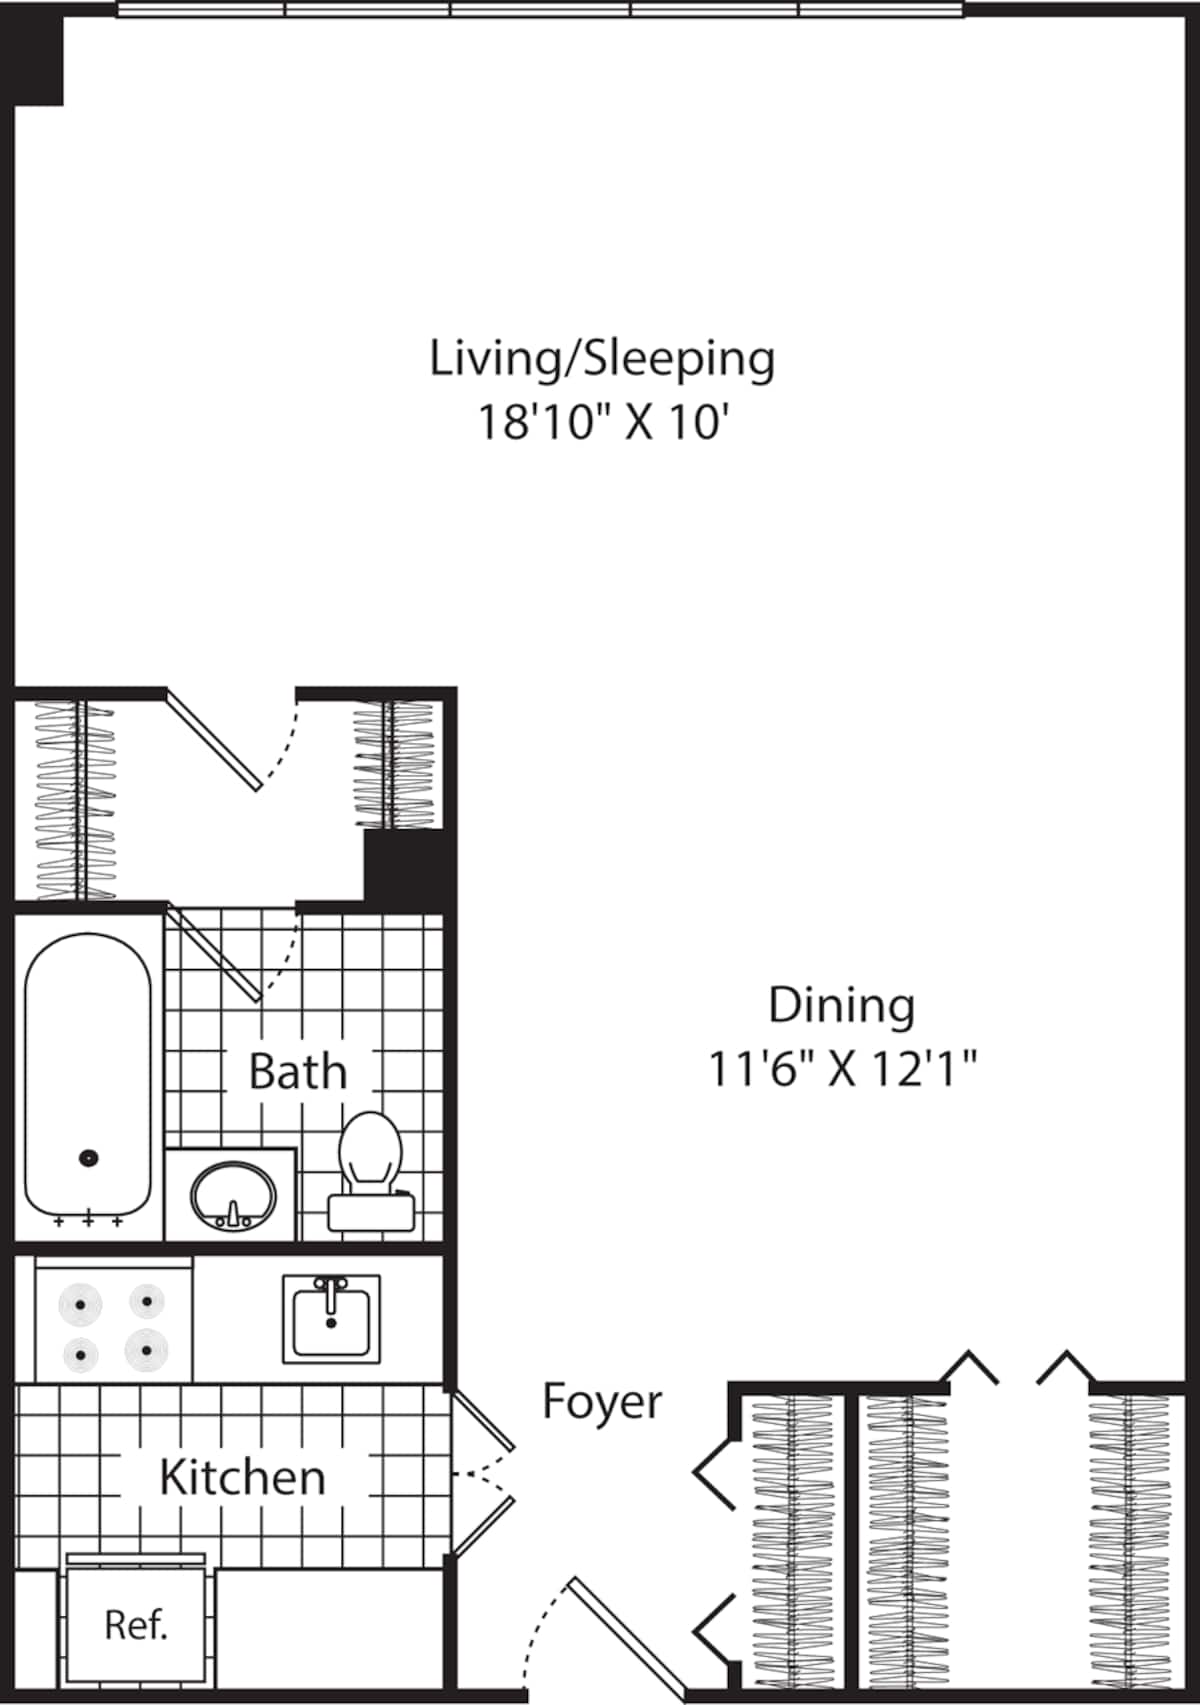 Floorplan diagram for The Copley, showing Studio